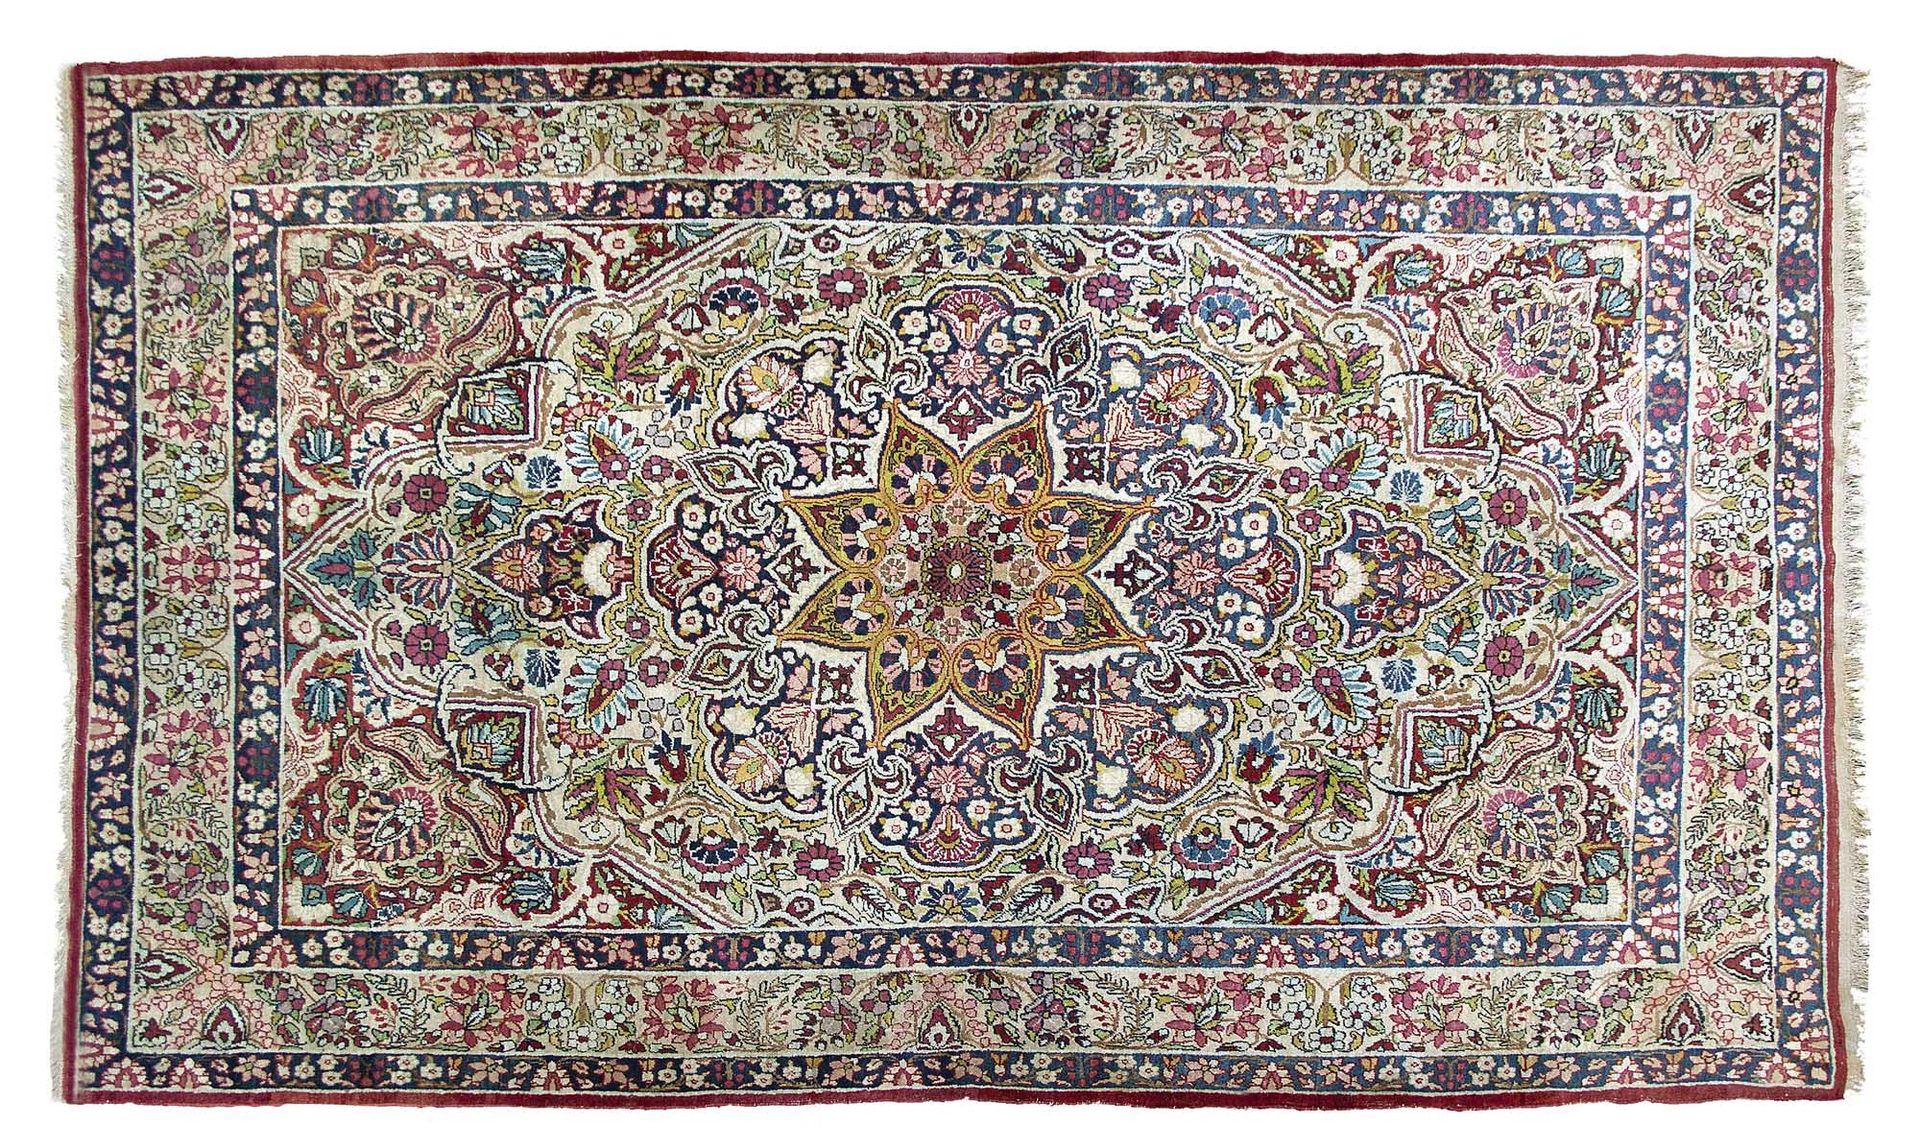 Null Original KIRMAN-LAVER carpet (Persia), late 19th century

Size : 220 x 135c&hellip;